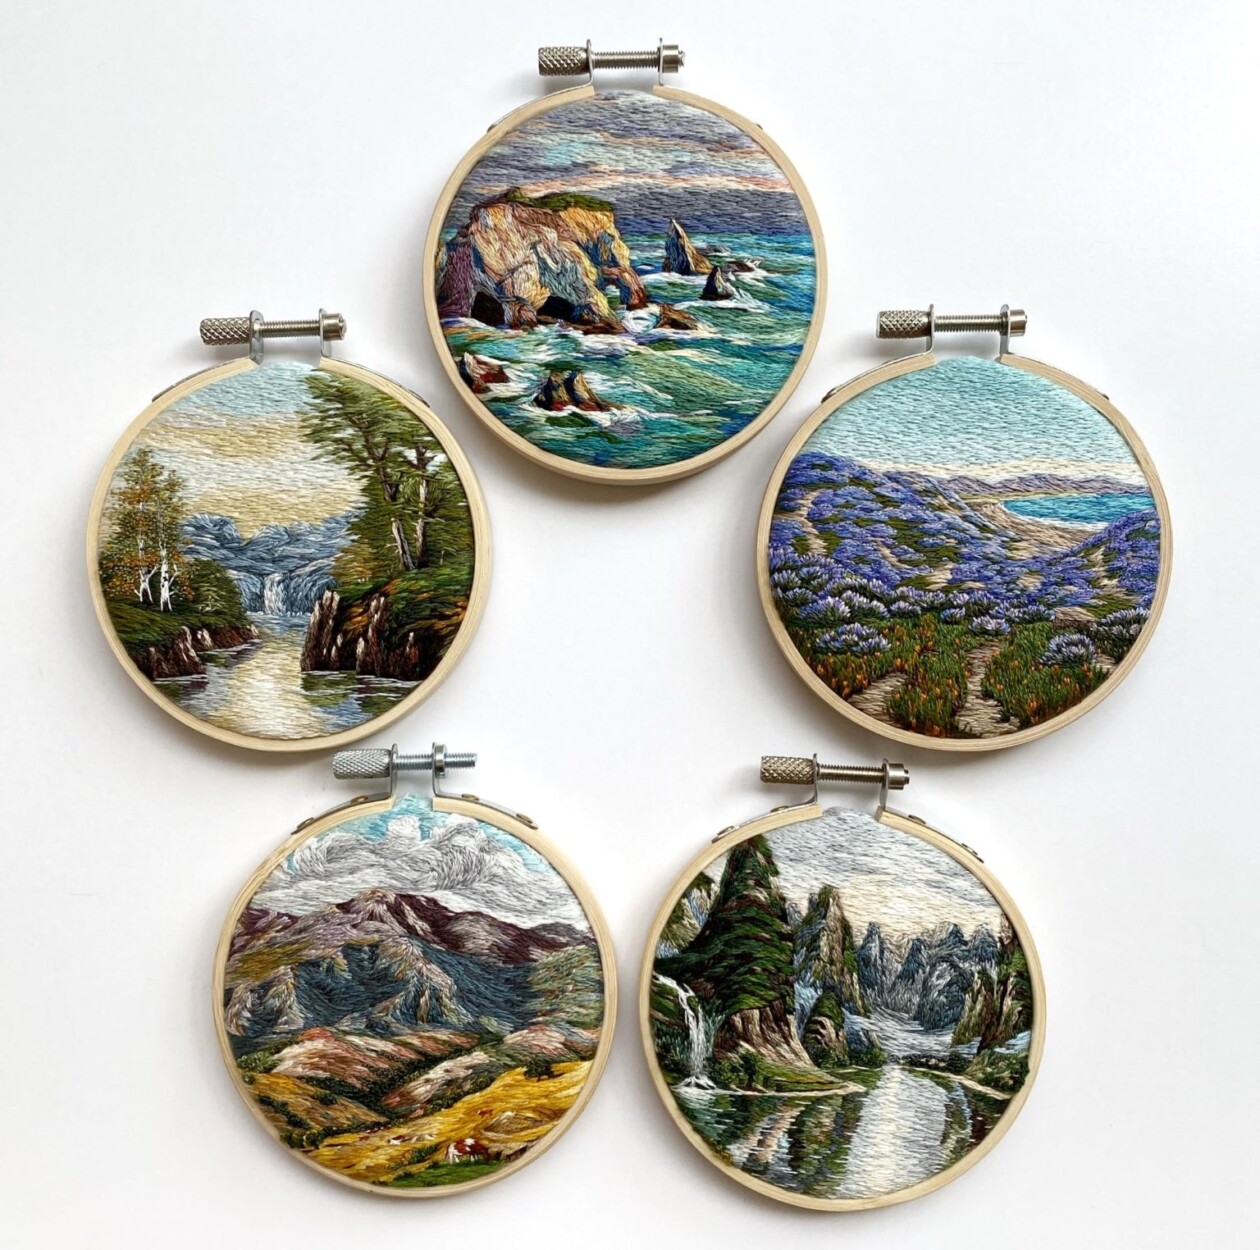 Wonderful Impressionistic Landscape Embroideries By Cassandra Dias (6)